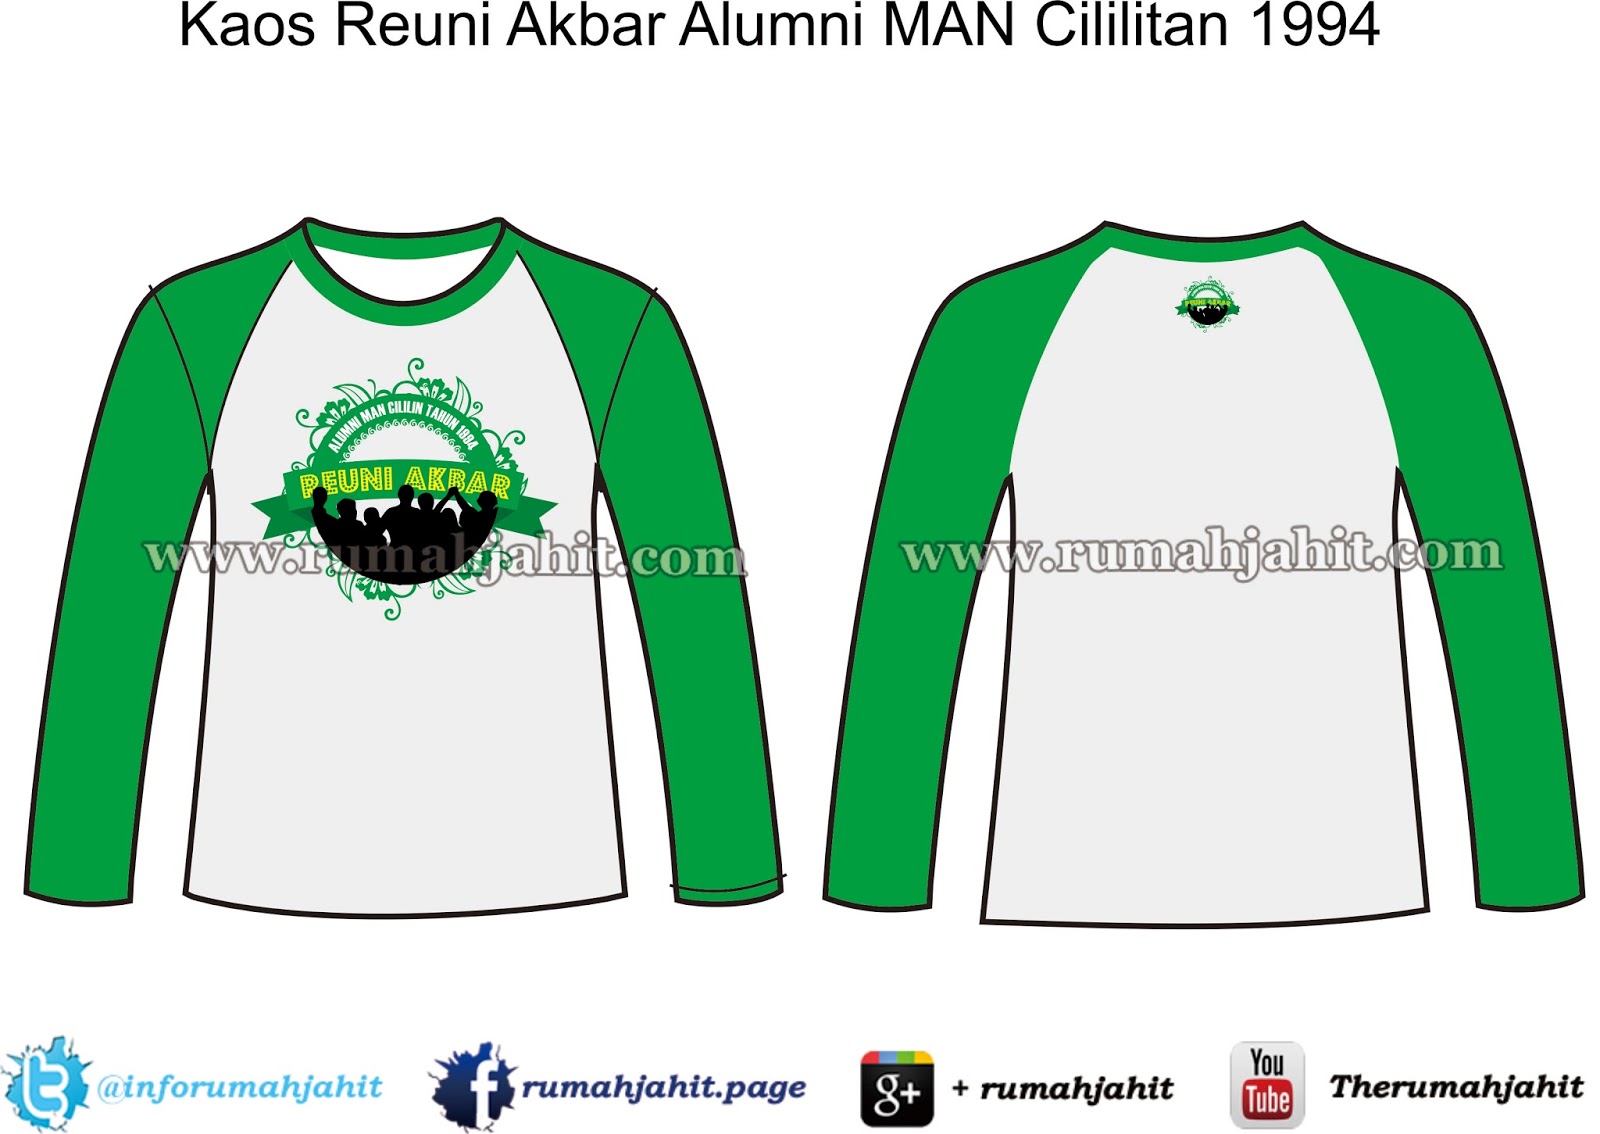  Kaos  Reuni Akbar Alumni  MAN Cililitan 1994 laki laki 